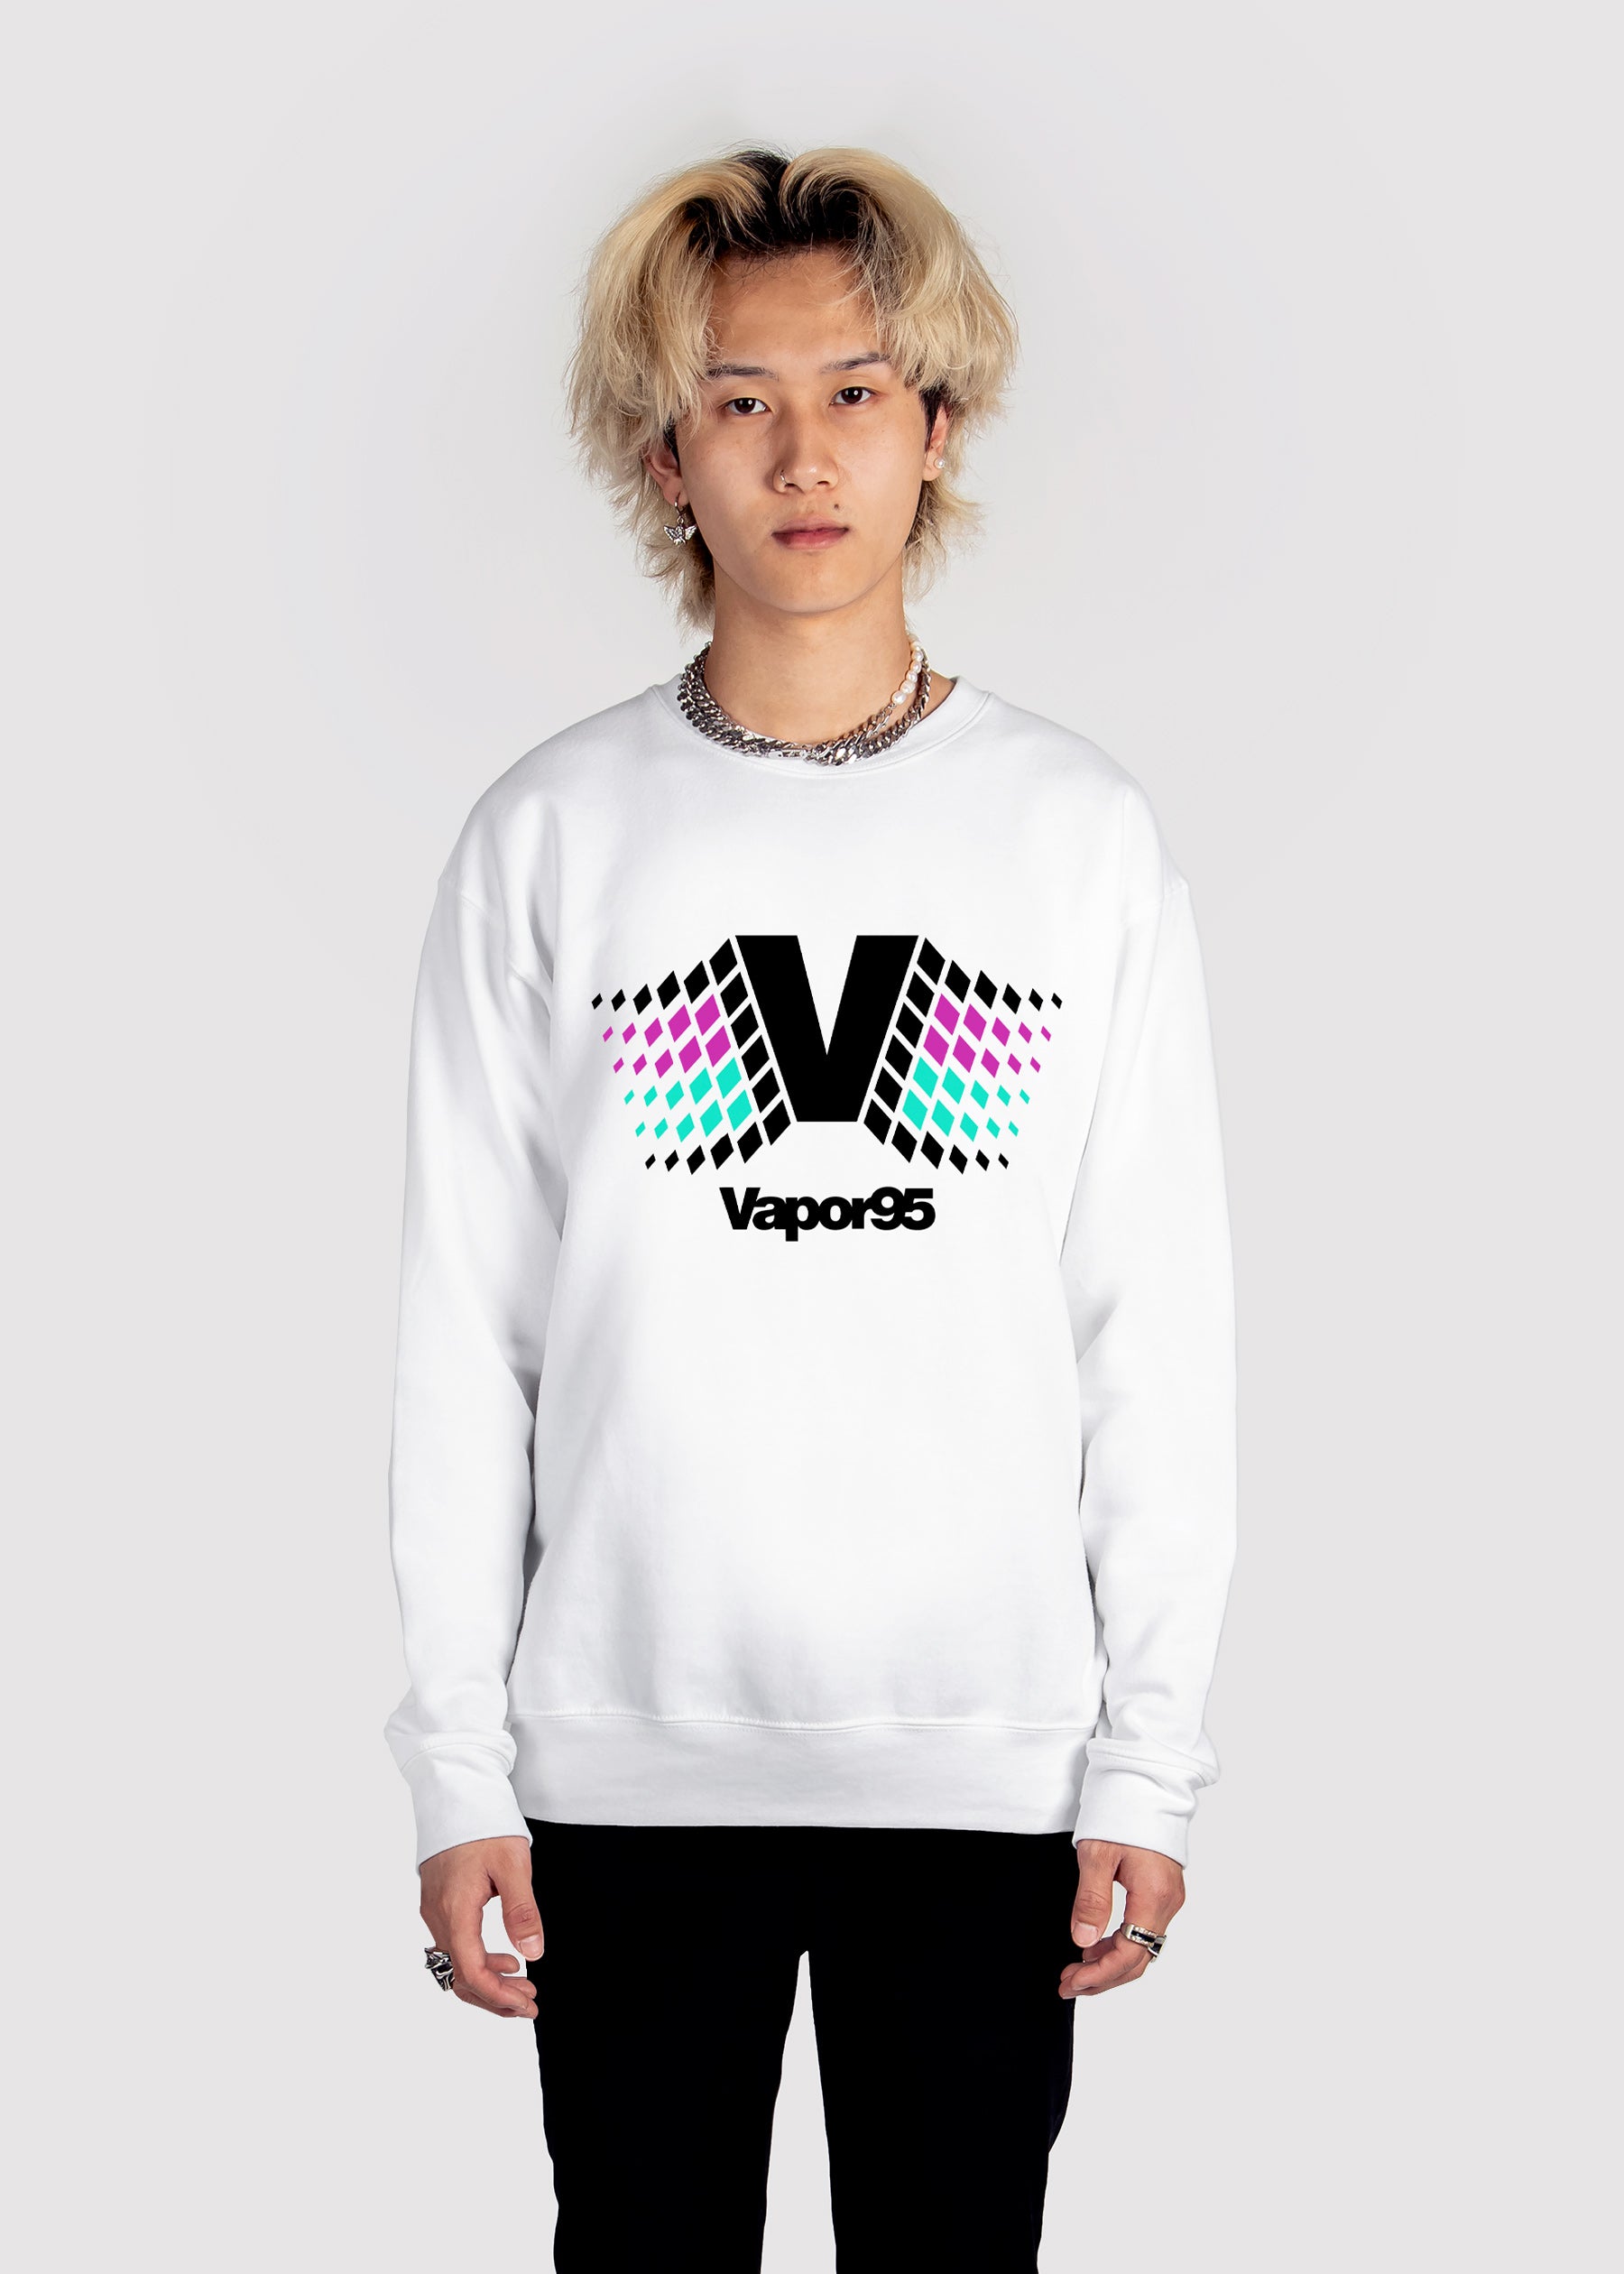 Vapor95 Legacy Sweatshirt